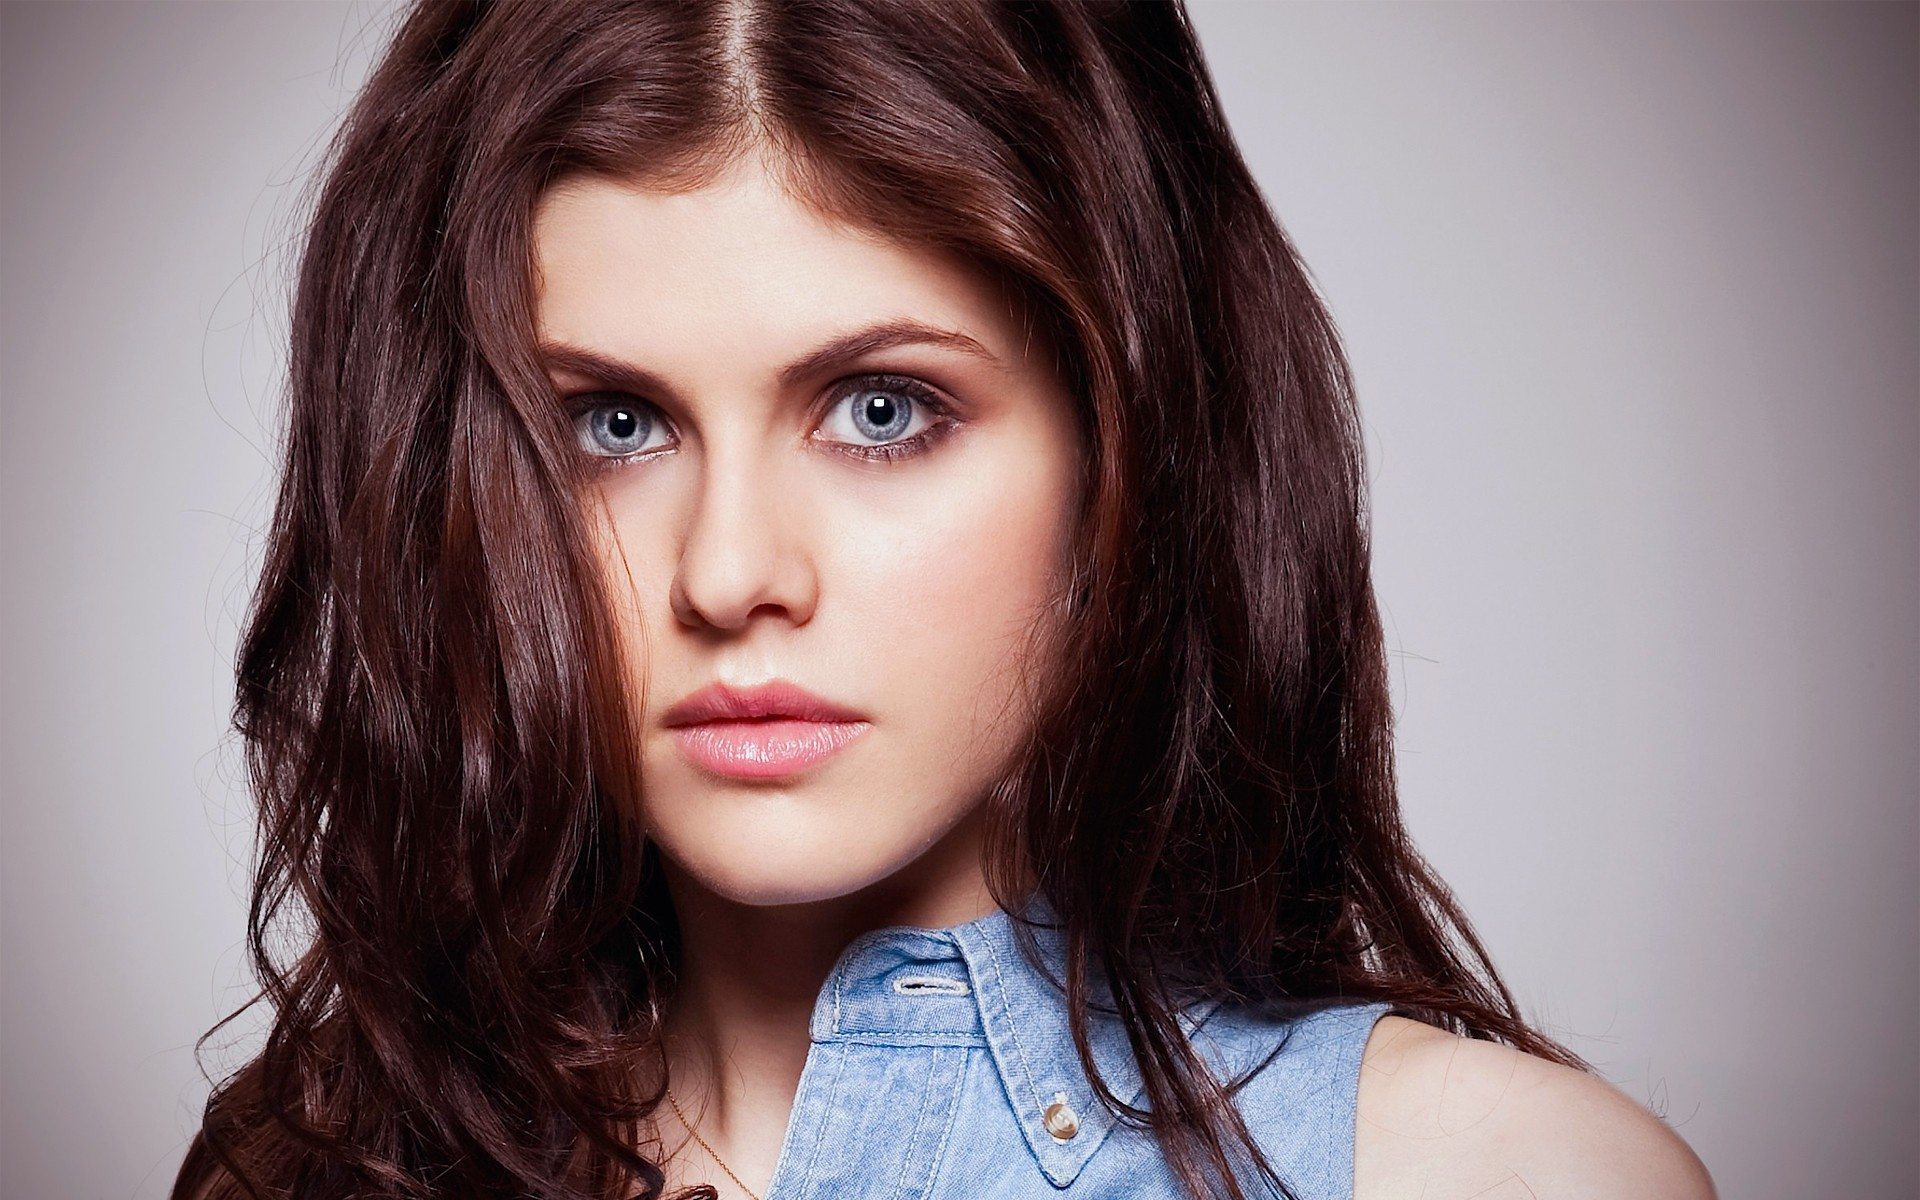 Dark-haired model with striking blue eyes - wide 11